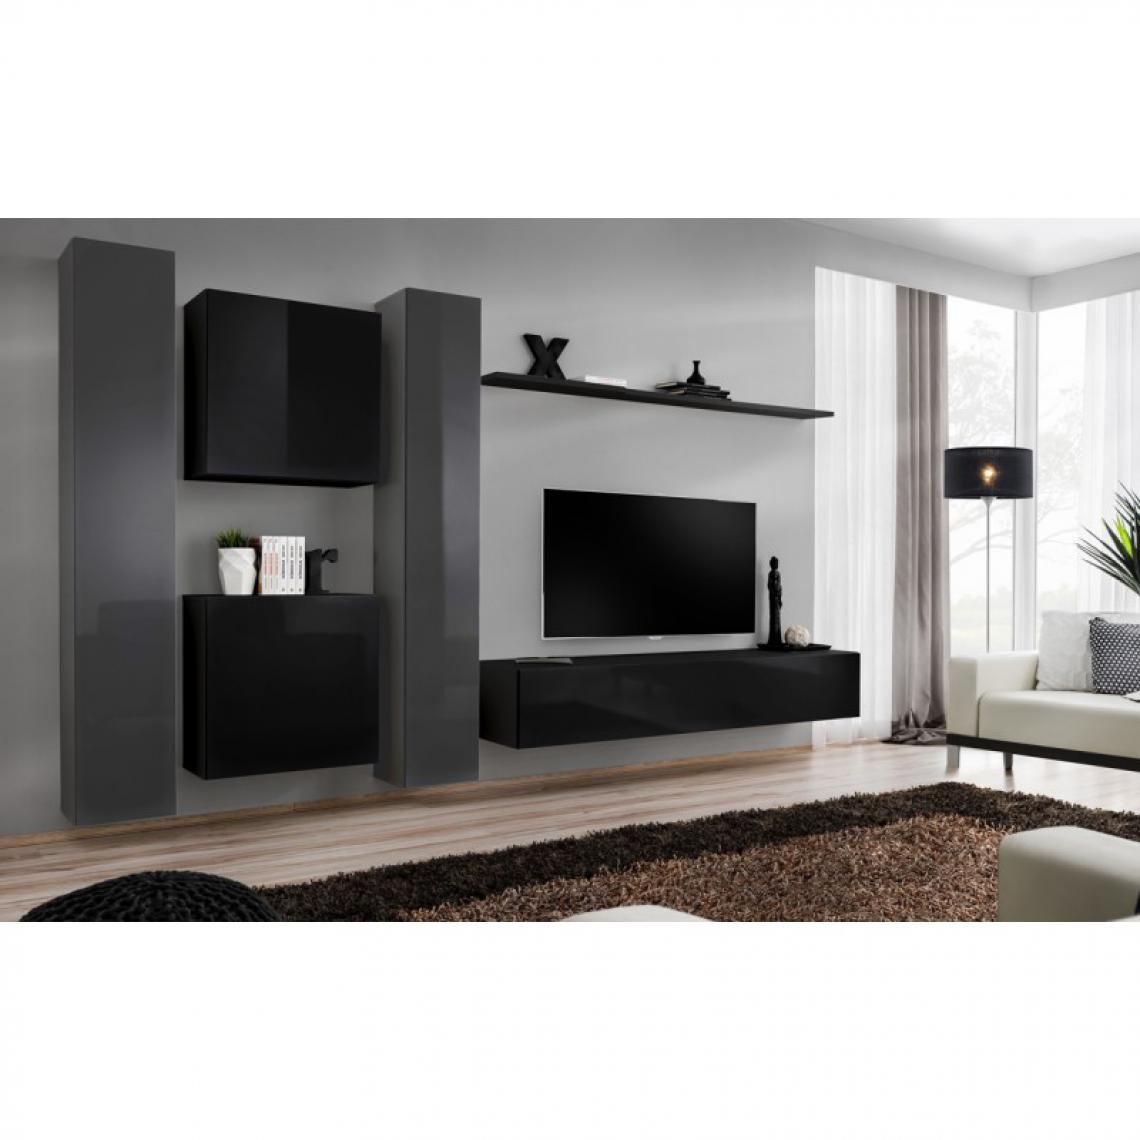 Ac-Deco - Meuble TV Mural Design Switch VI 330cm Noir & Gris - Meubles TV, Hi-Fi